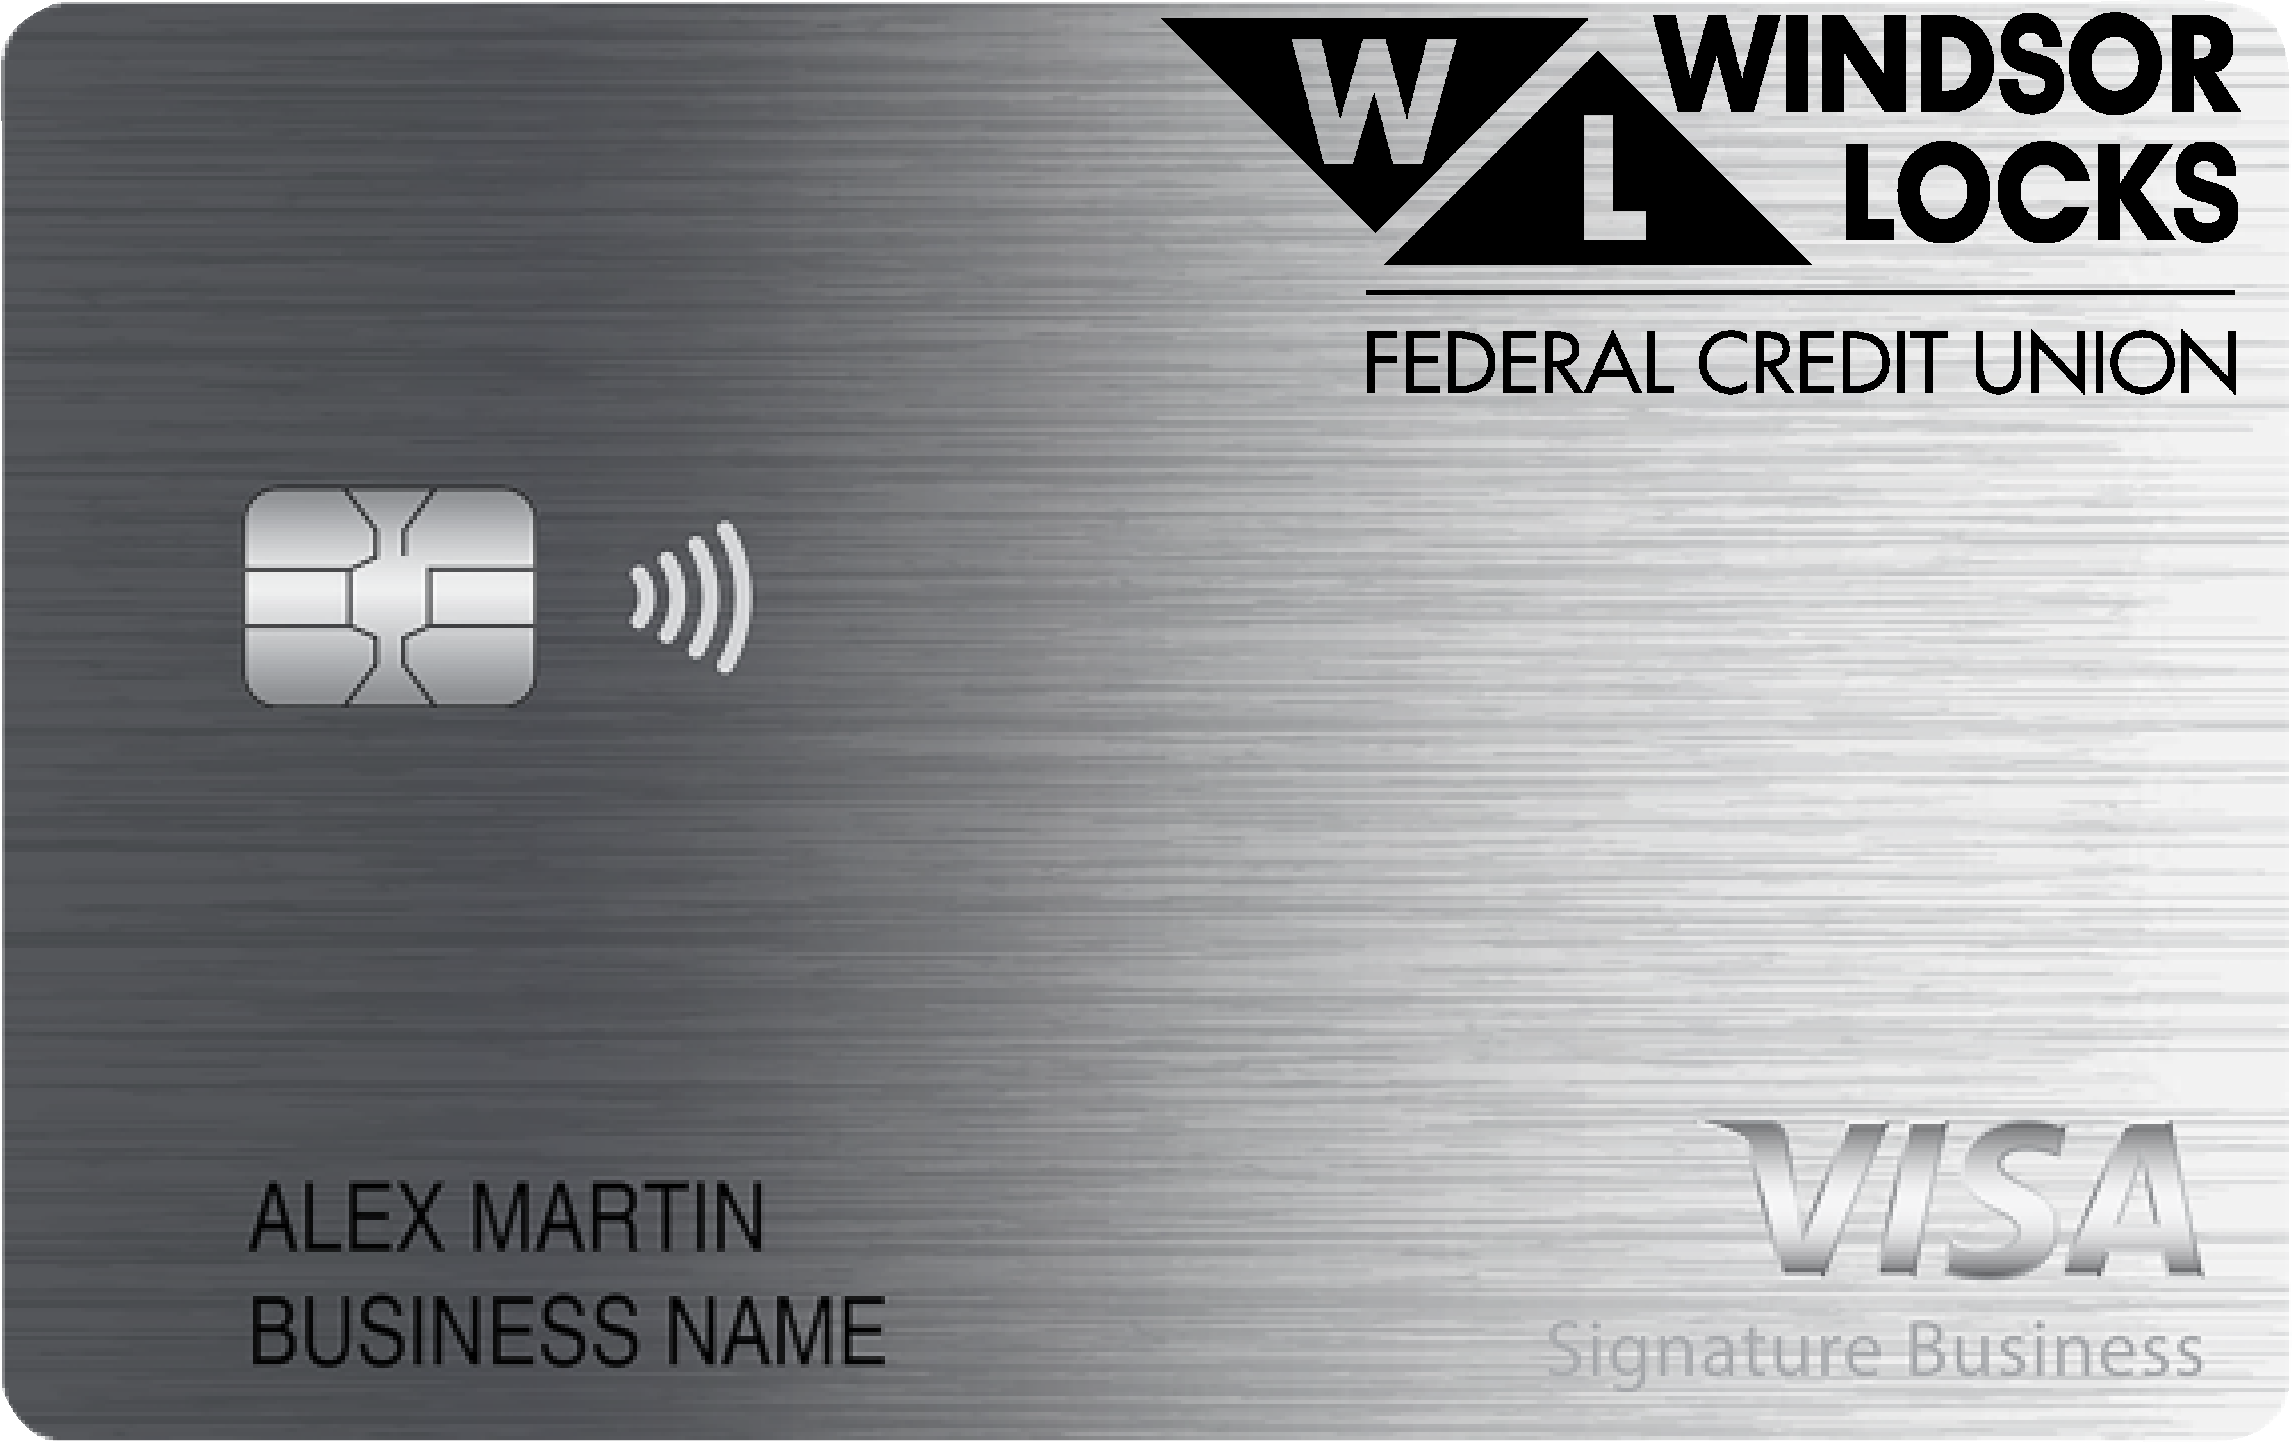 Windsor Locks Federal Credit Union Smart Business Rewards Card